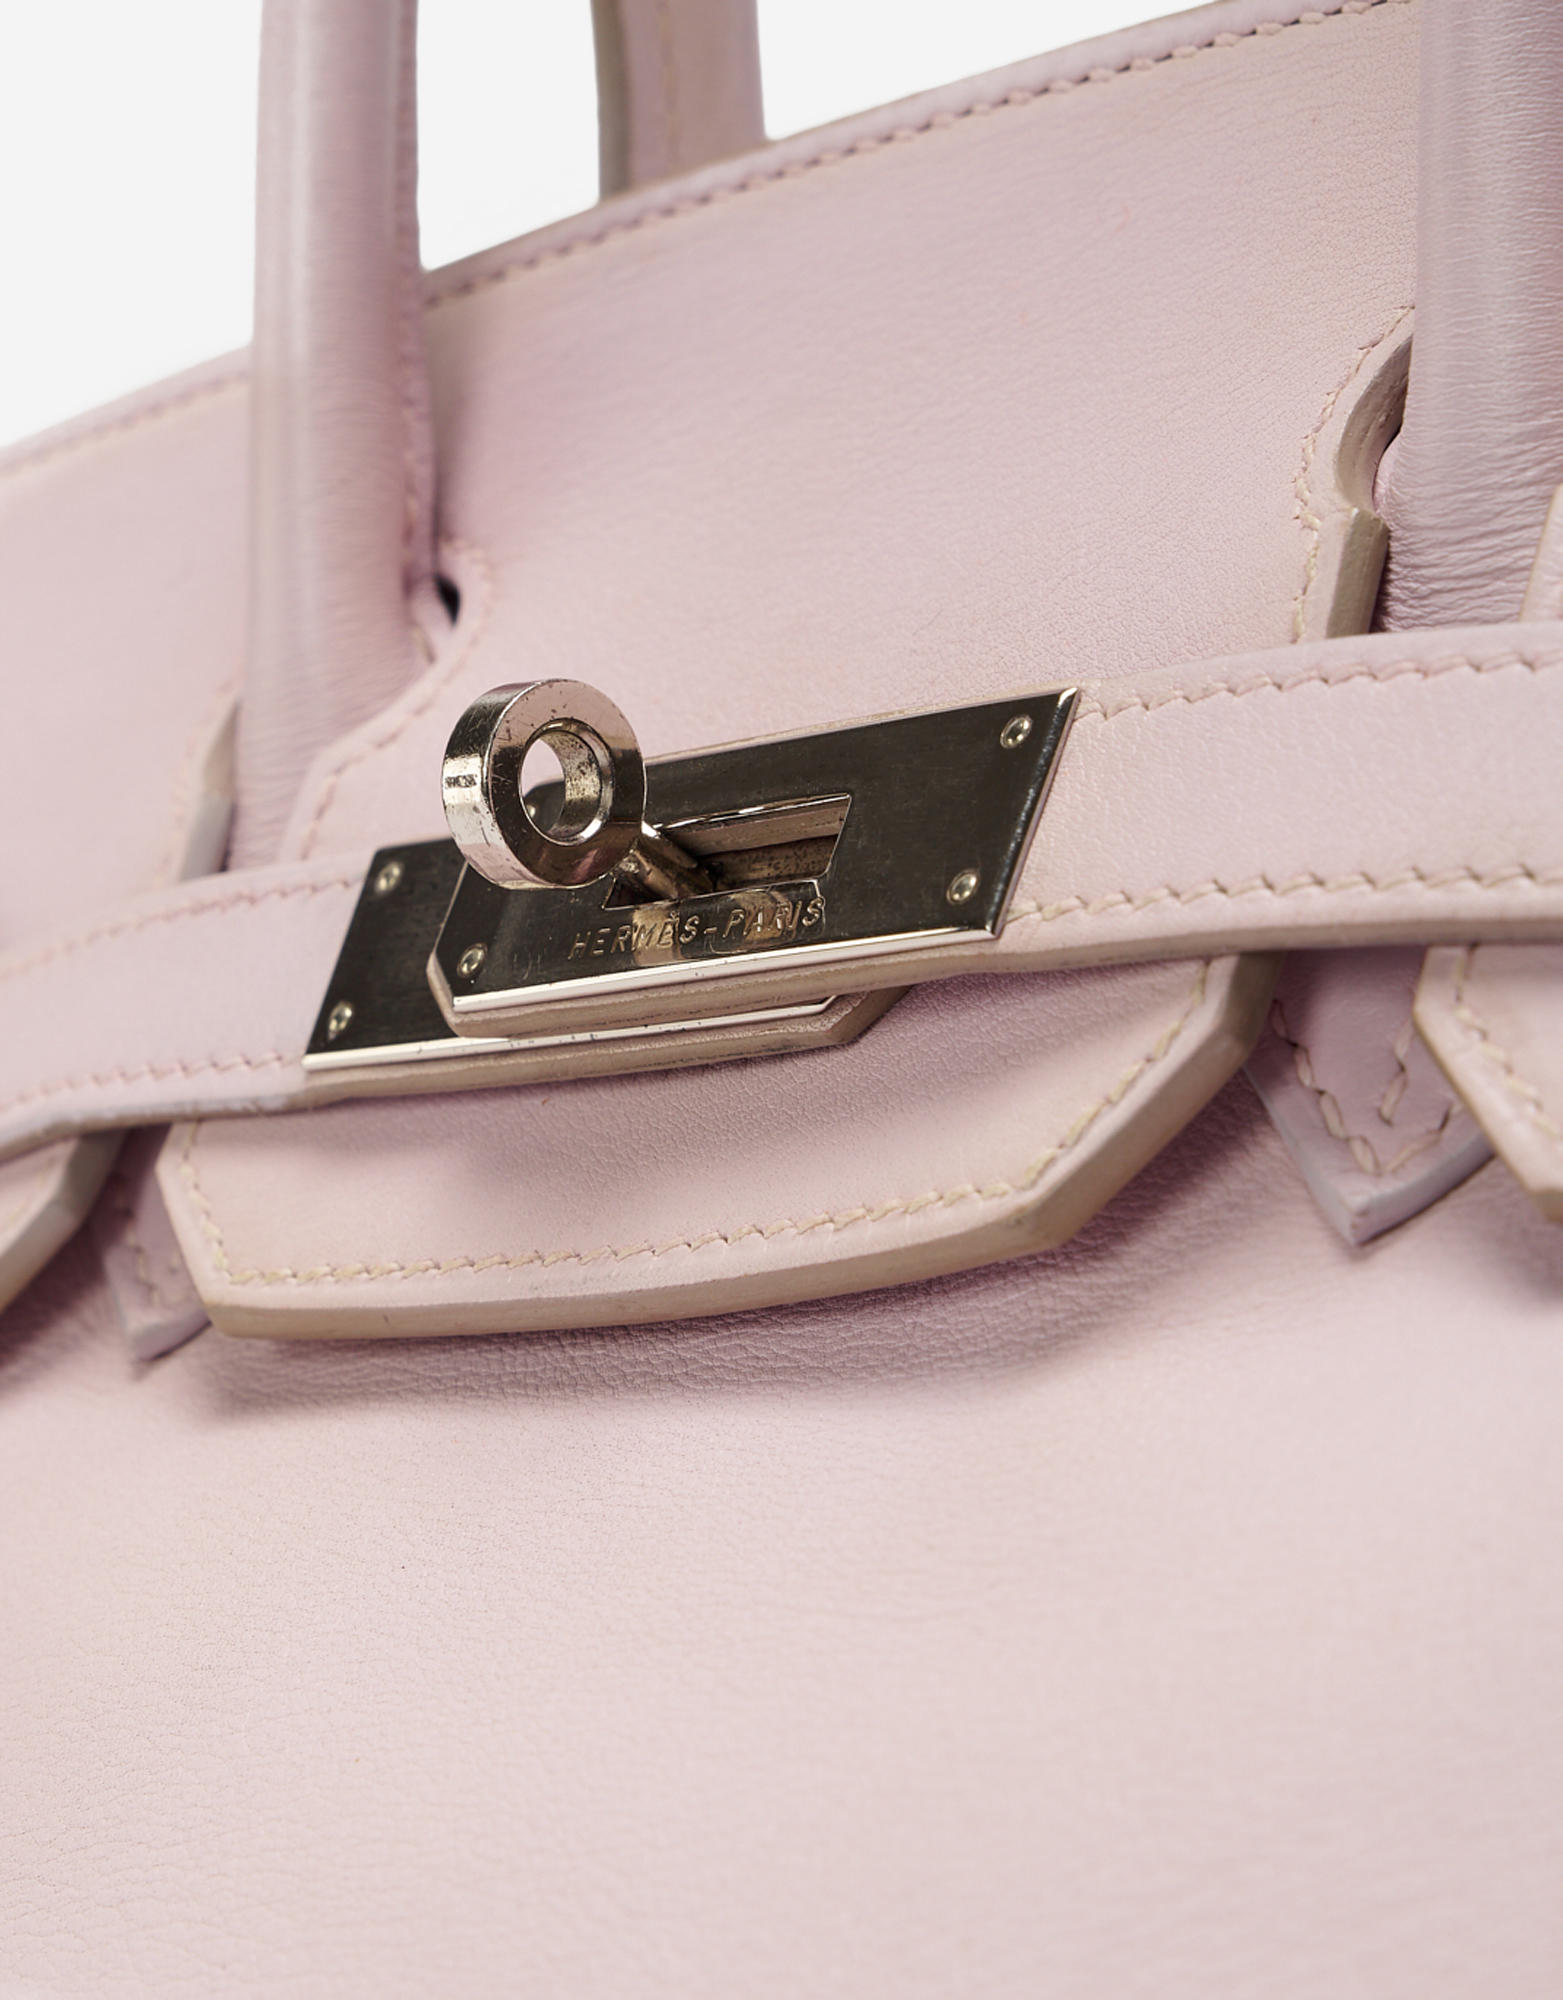 Hermes Birkin Handbag Rose Dragee Swift with Palladium Hardware 35